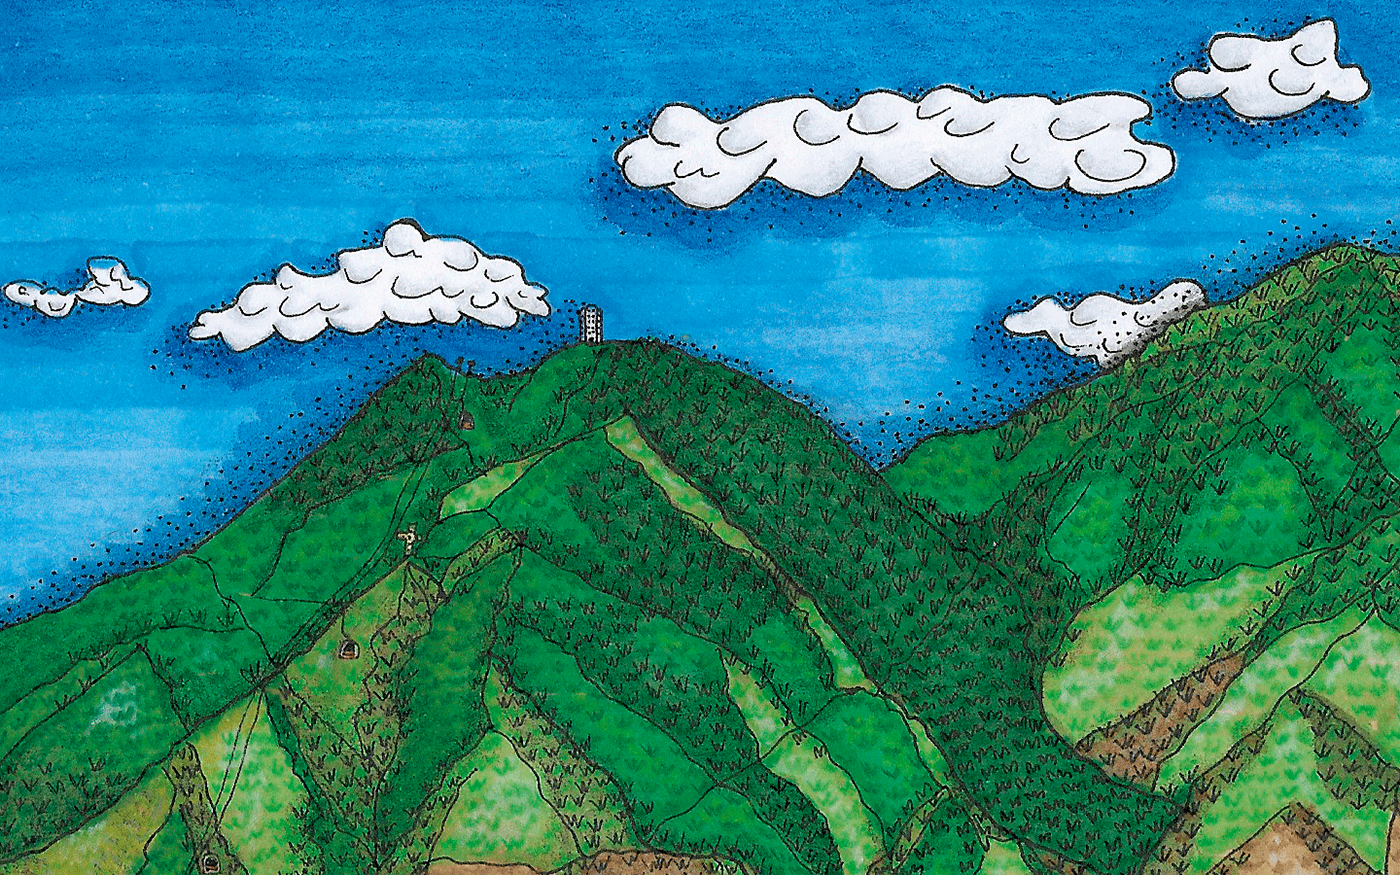 El Avila venezuela caracas mountains colors hand draw byhand art map